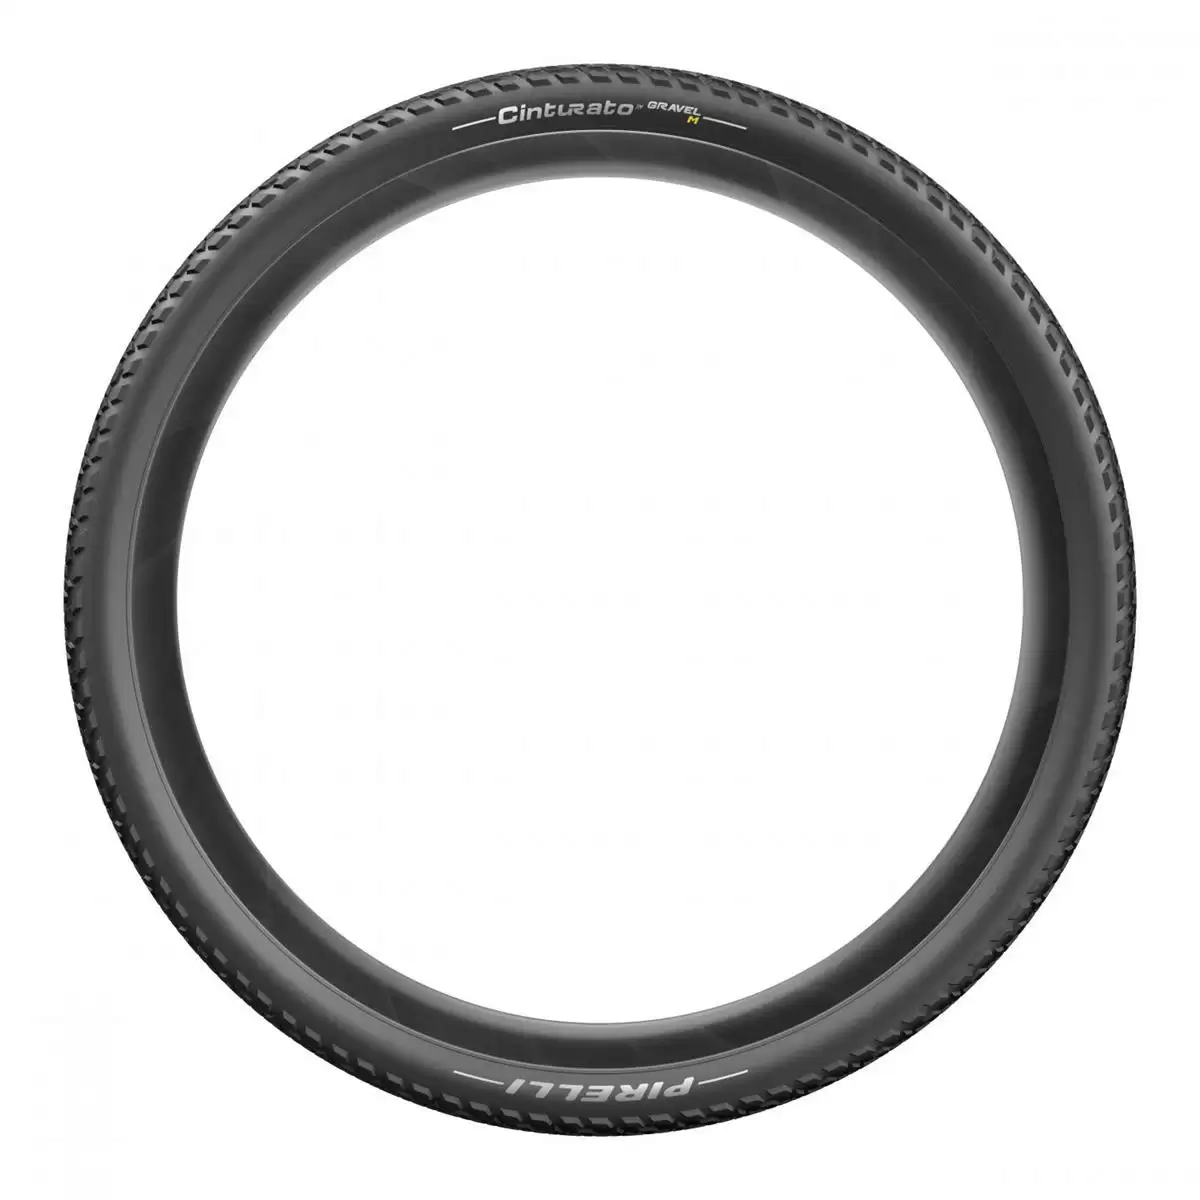 Neumático Cinturato Gravel Mixed Terrain 700x35c Tubeless Ready Negro #3